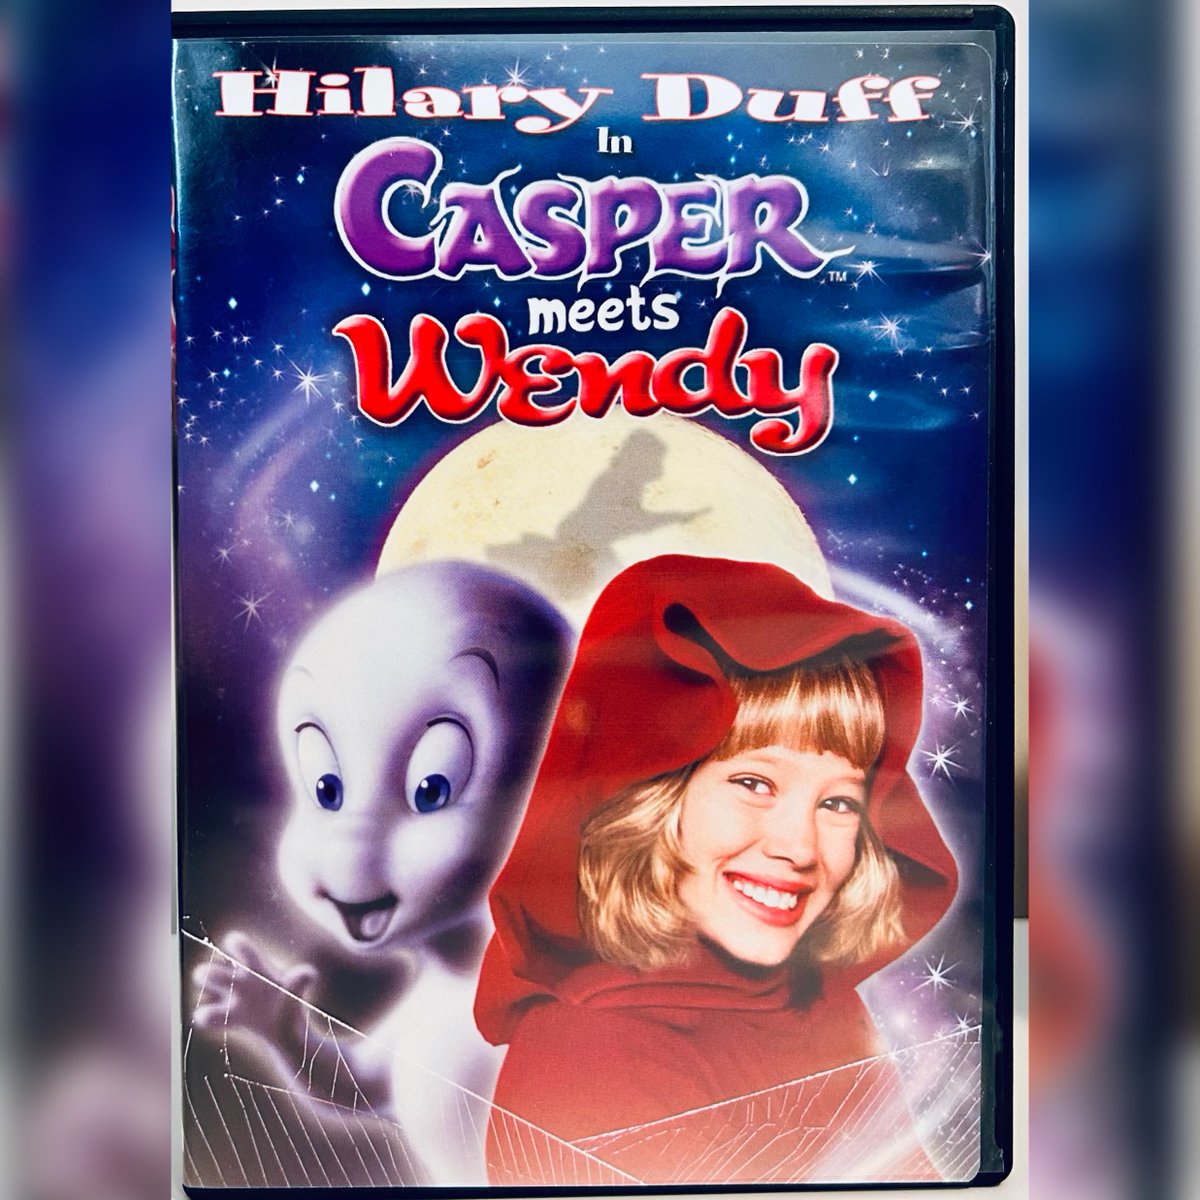 #ReStock! Casper Meets Wendy (DVD, 1998) Comedy/Fantasy Hillary Duff Fox Rare OOP

rareflicksplus.com/product-page/c…

#checkitout #Casper #CasperMeetsWendy #90s #ComedyMovie #Fantasy #HillaryDuff #Fox #Rare #OOP #HTF #DVD #DVDs #PhysicalMedia #Flashback #DvdWebsite #DvdStore #